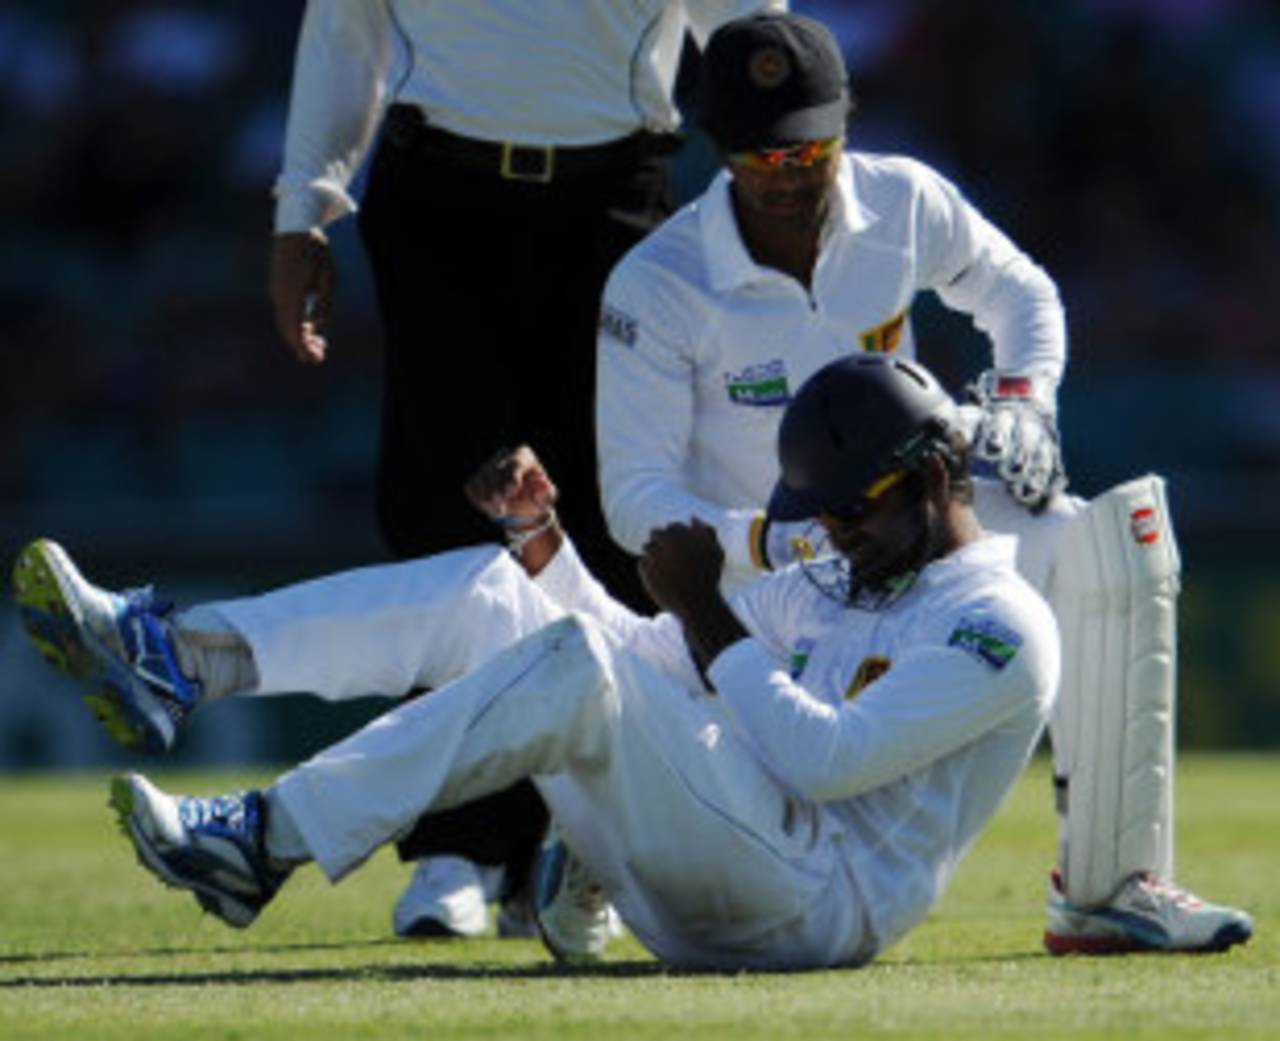 Lahiru Thirimanne was struck on the thigh while fielding at short leg, Australia v Sri Lanka, 3rd Test, Sydney, 2nd day, January 4, 2013